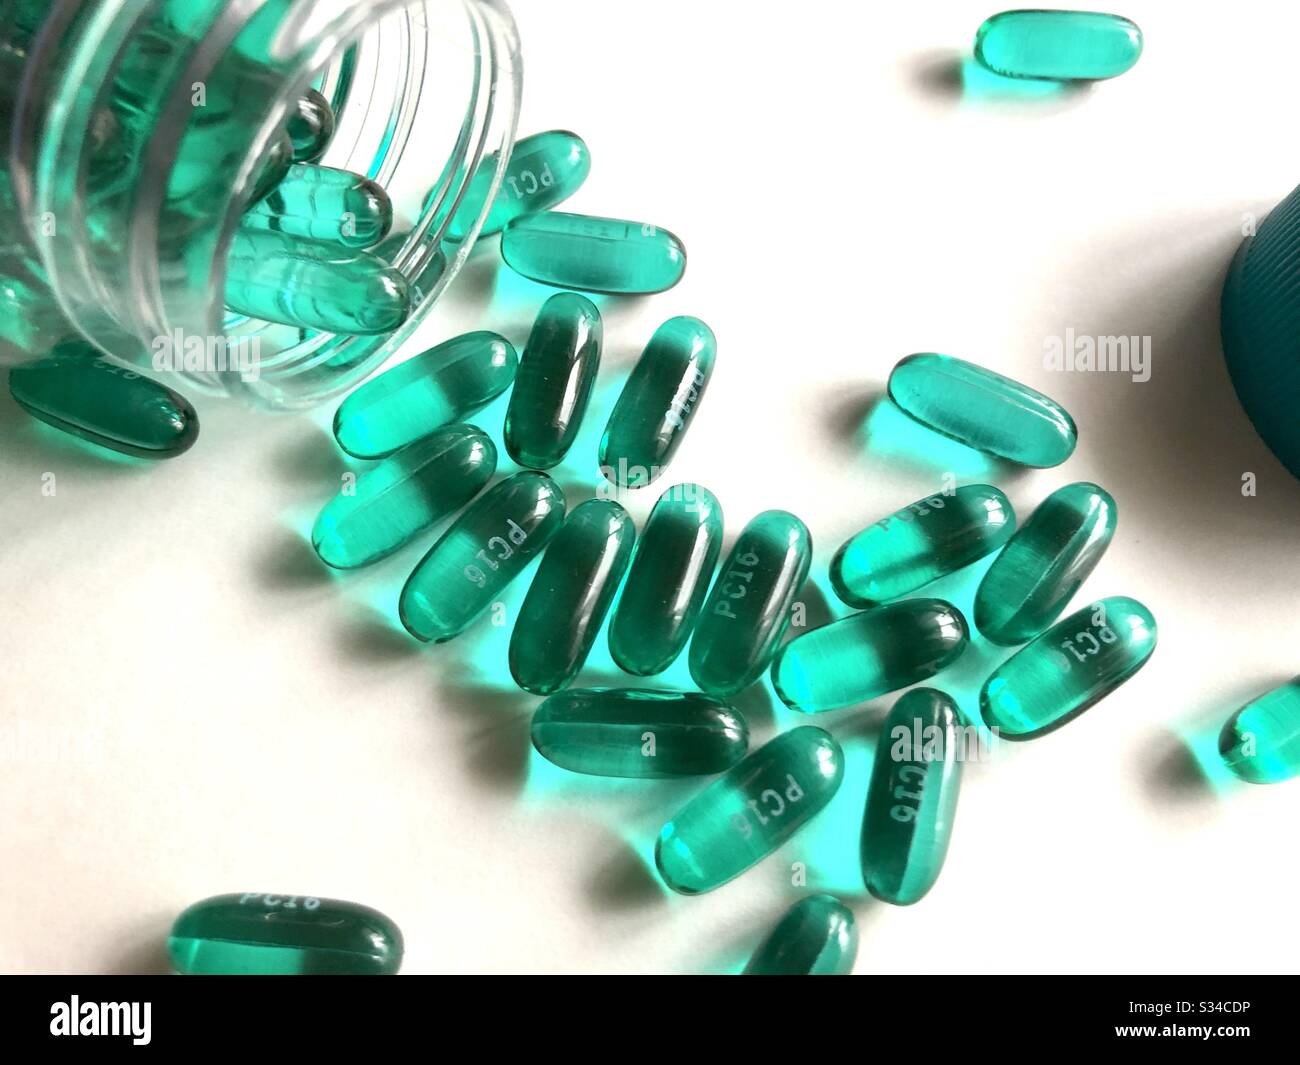 Ibuprofen gel caps on a white background Stock Photo